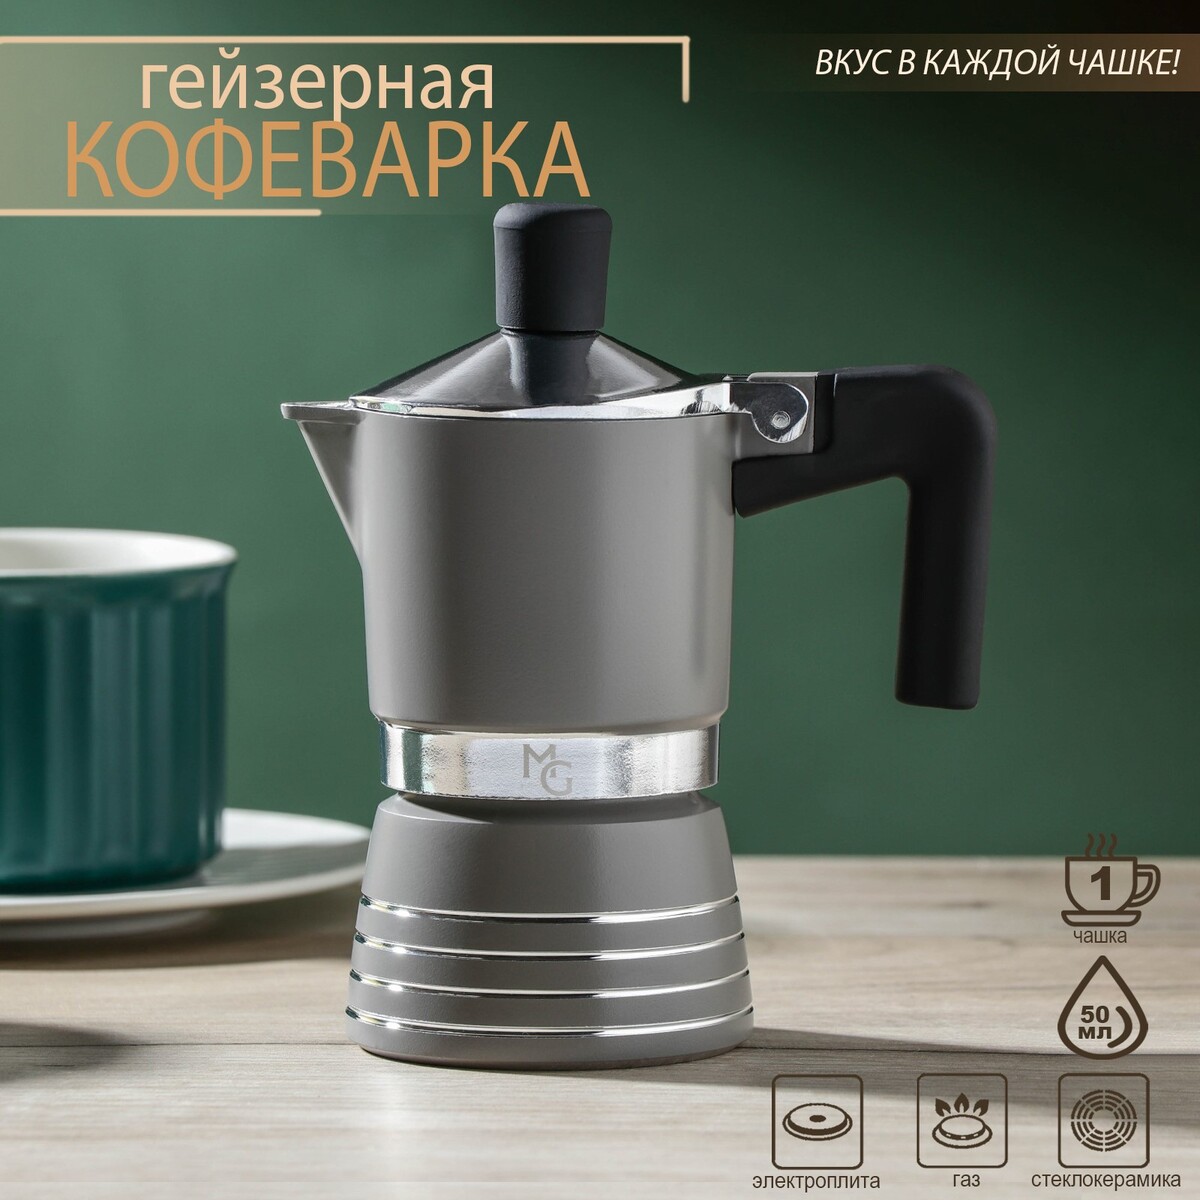 Кофеварка гейзерная magistro moka, на 1 чашку, 50 мл кофеварка гейзерная kelli kl 3017